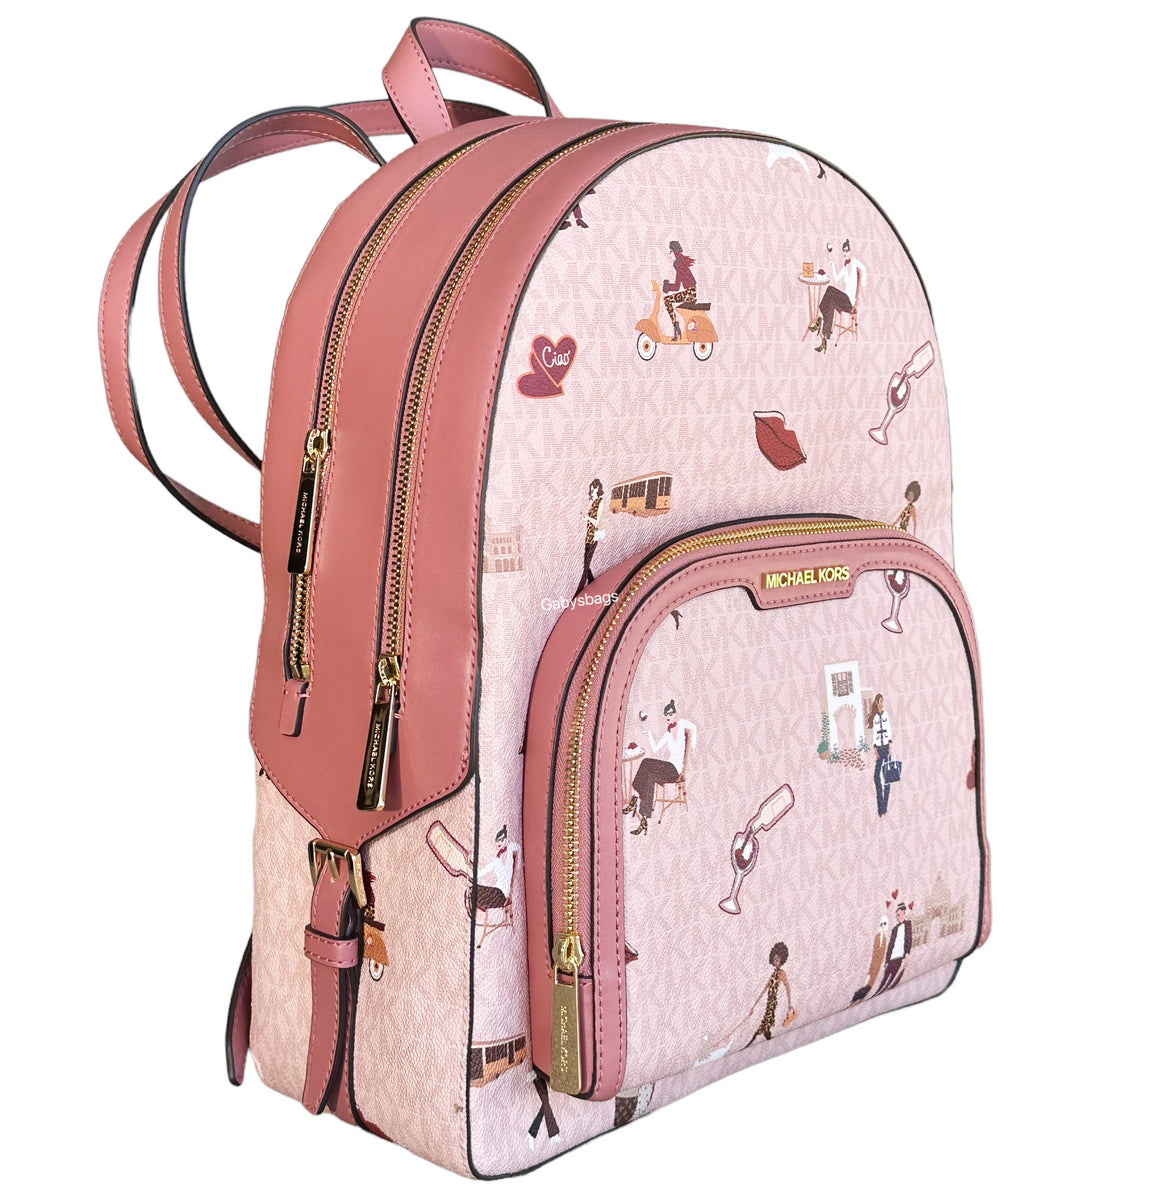 Michael Kors, Bags, Pink Michael Kors Backpack